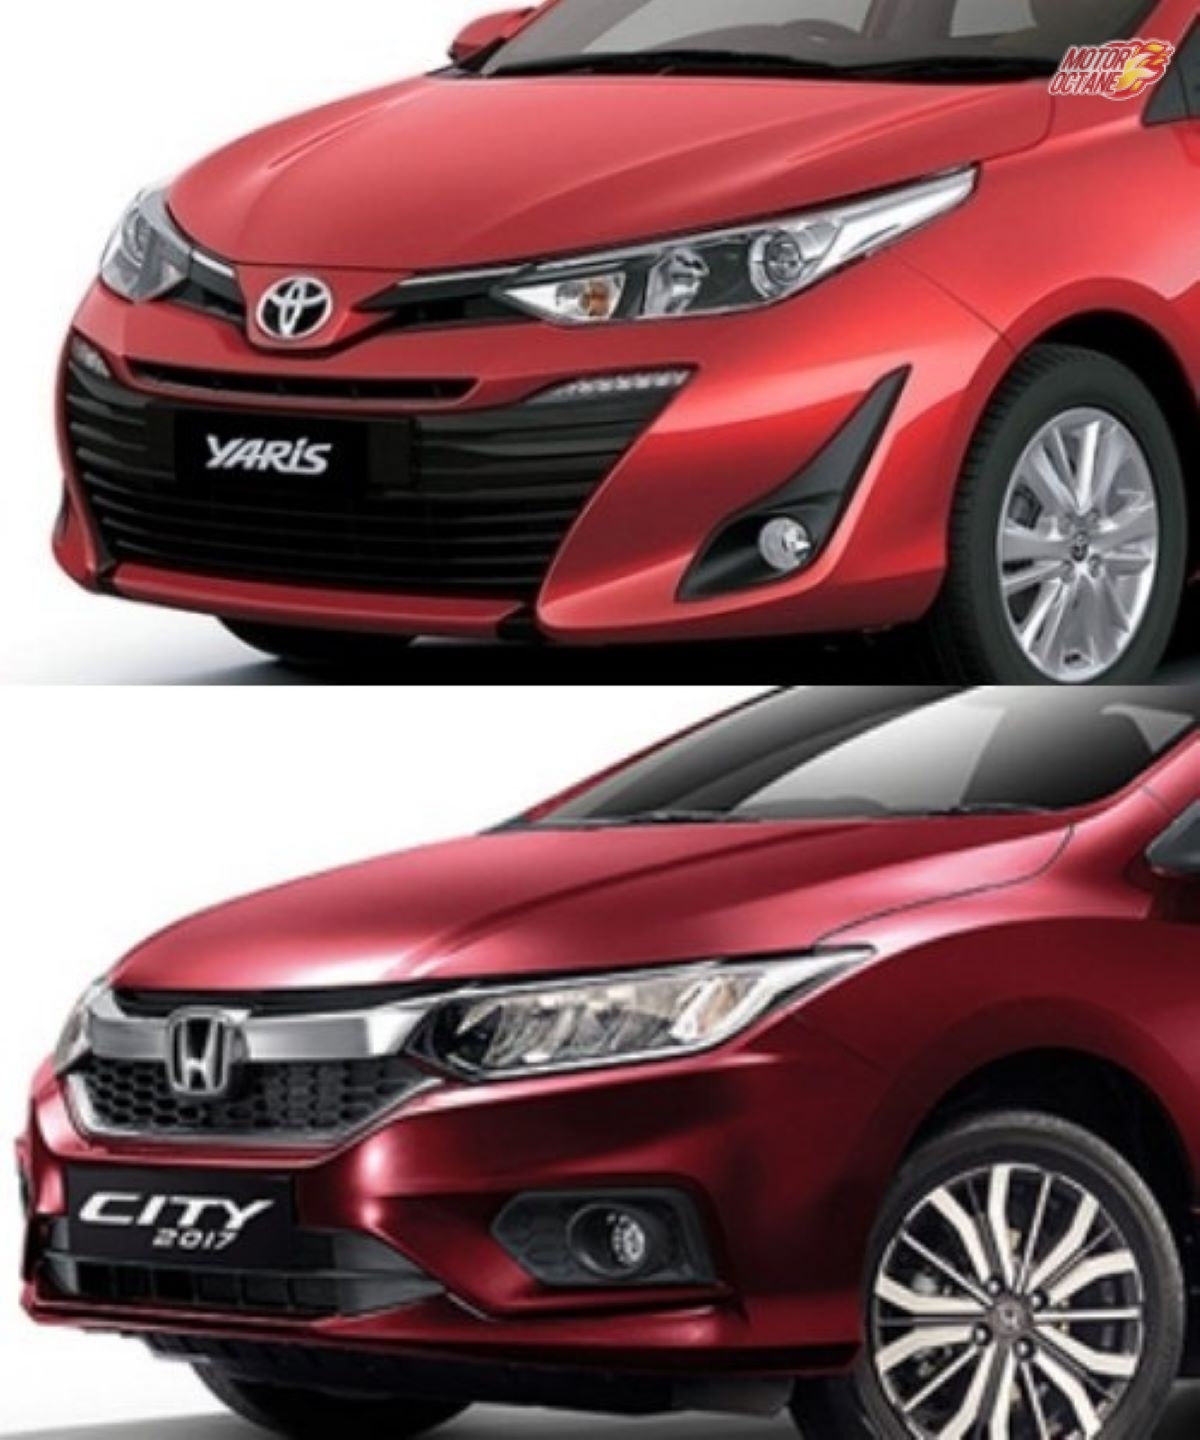 Toyota-Yaris-vs-Honda-City-Comparison